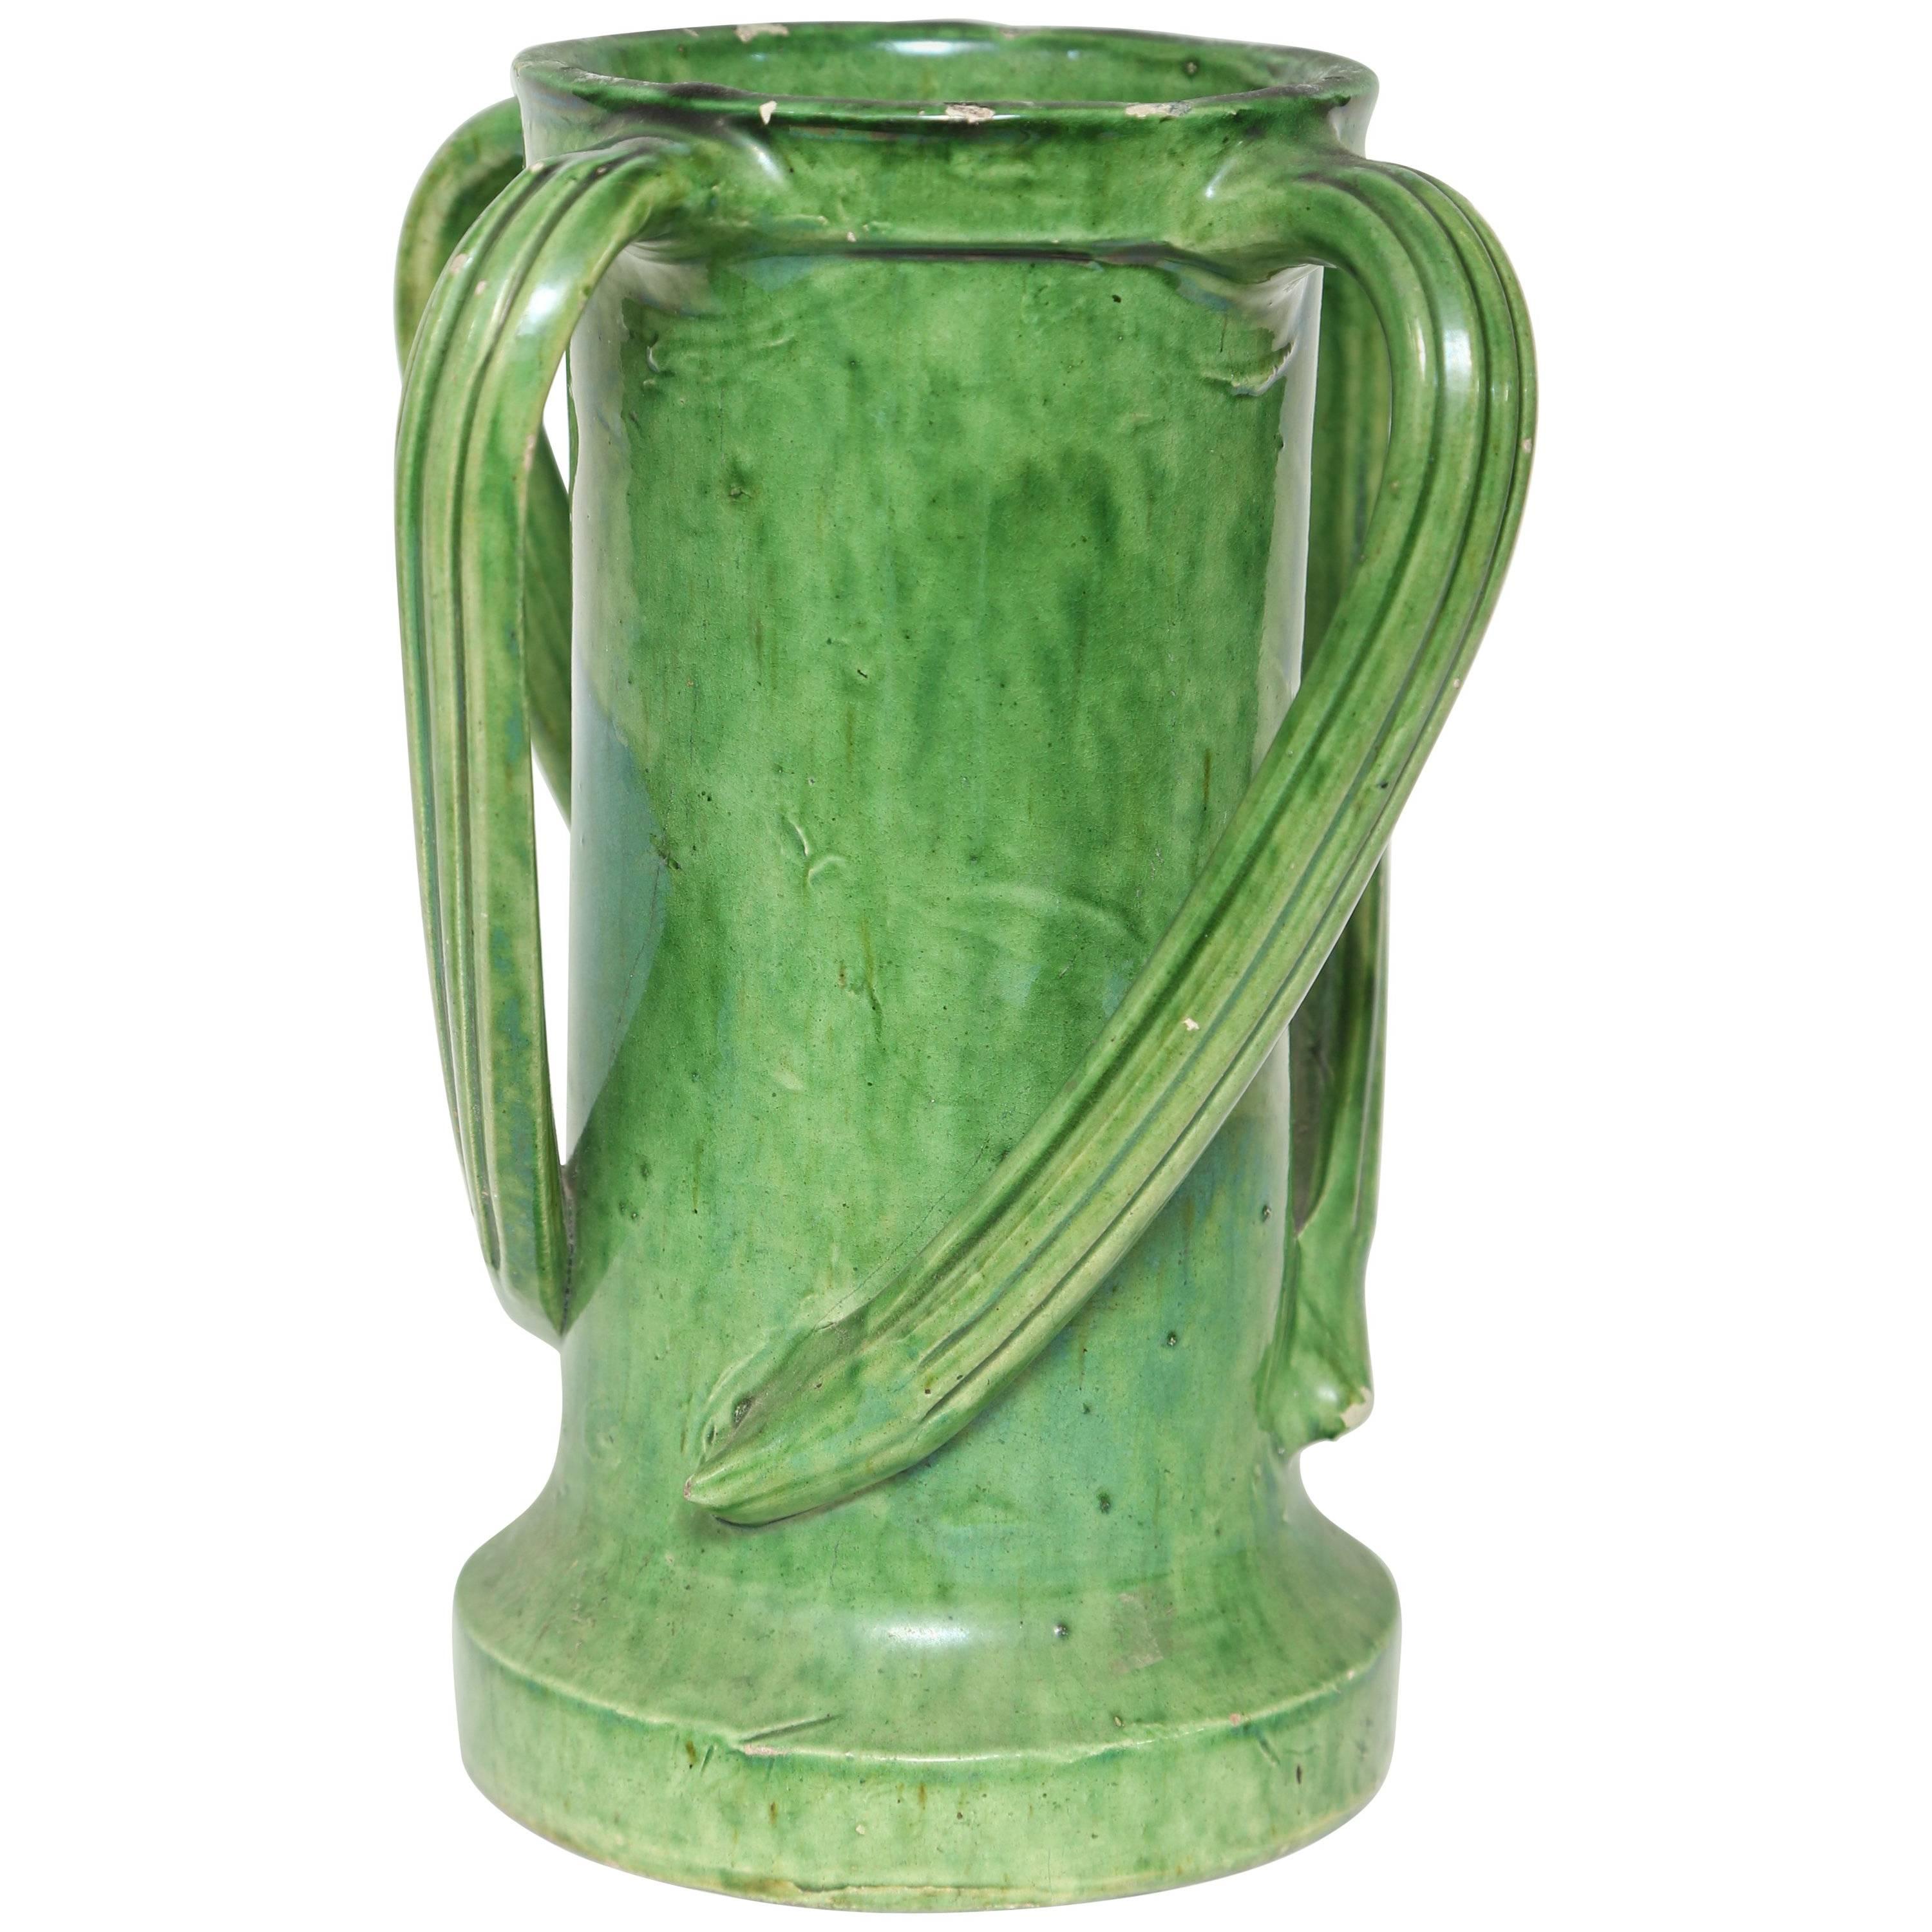  Four Handled French Green Glazed Ceramic Vase 